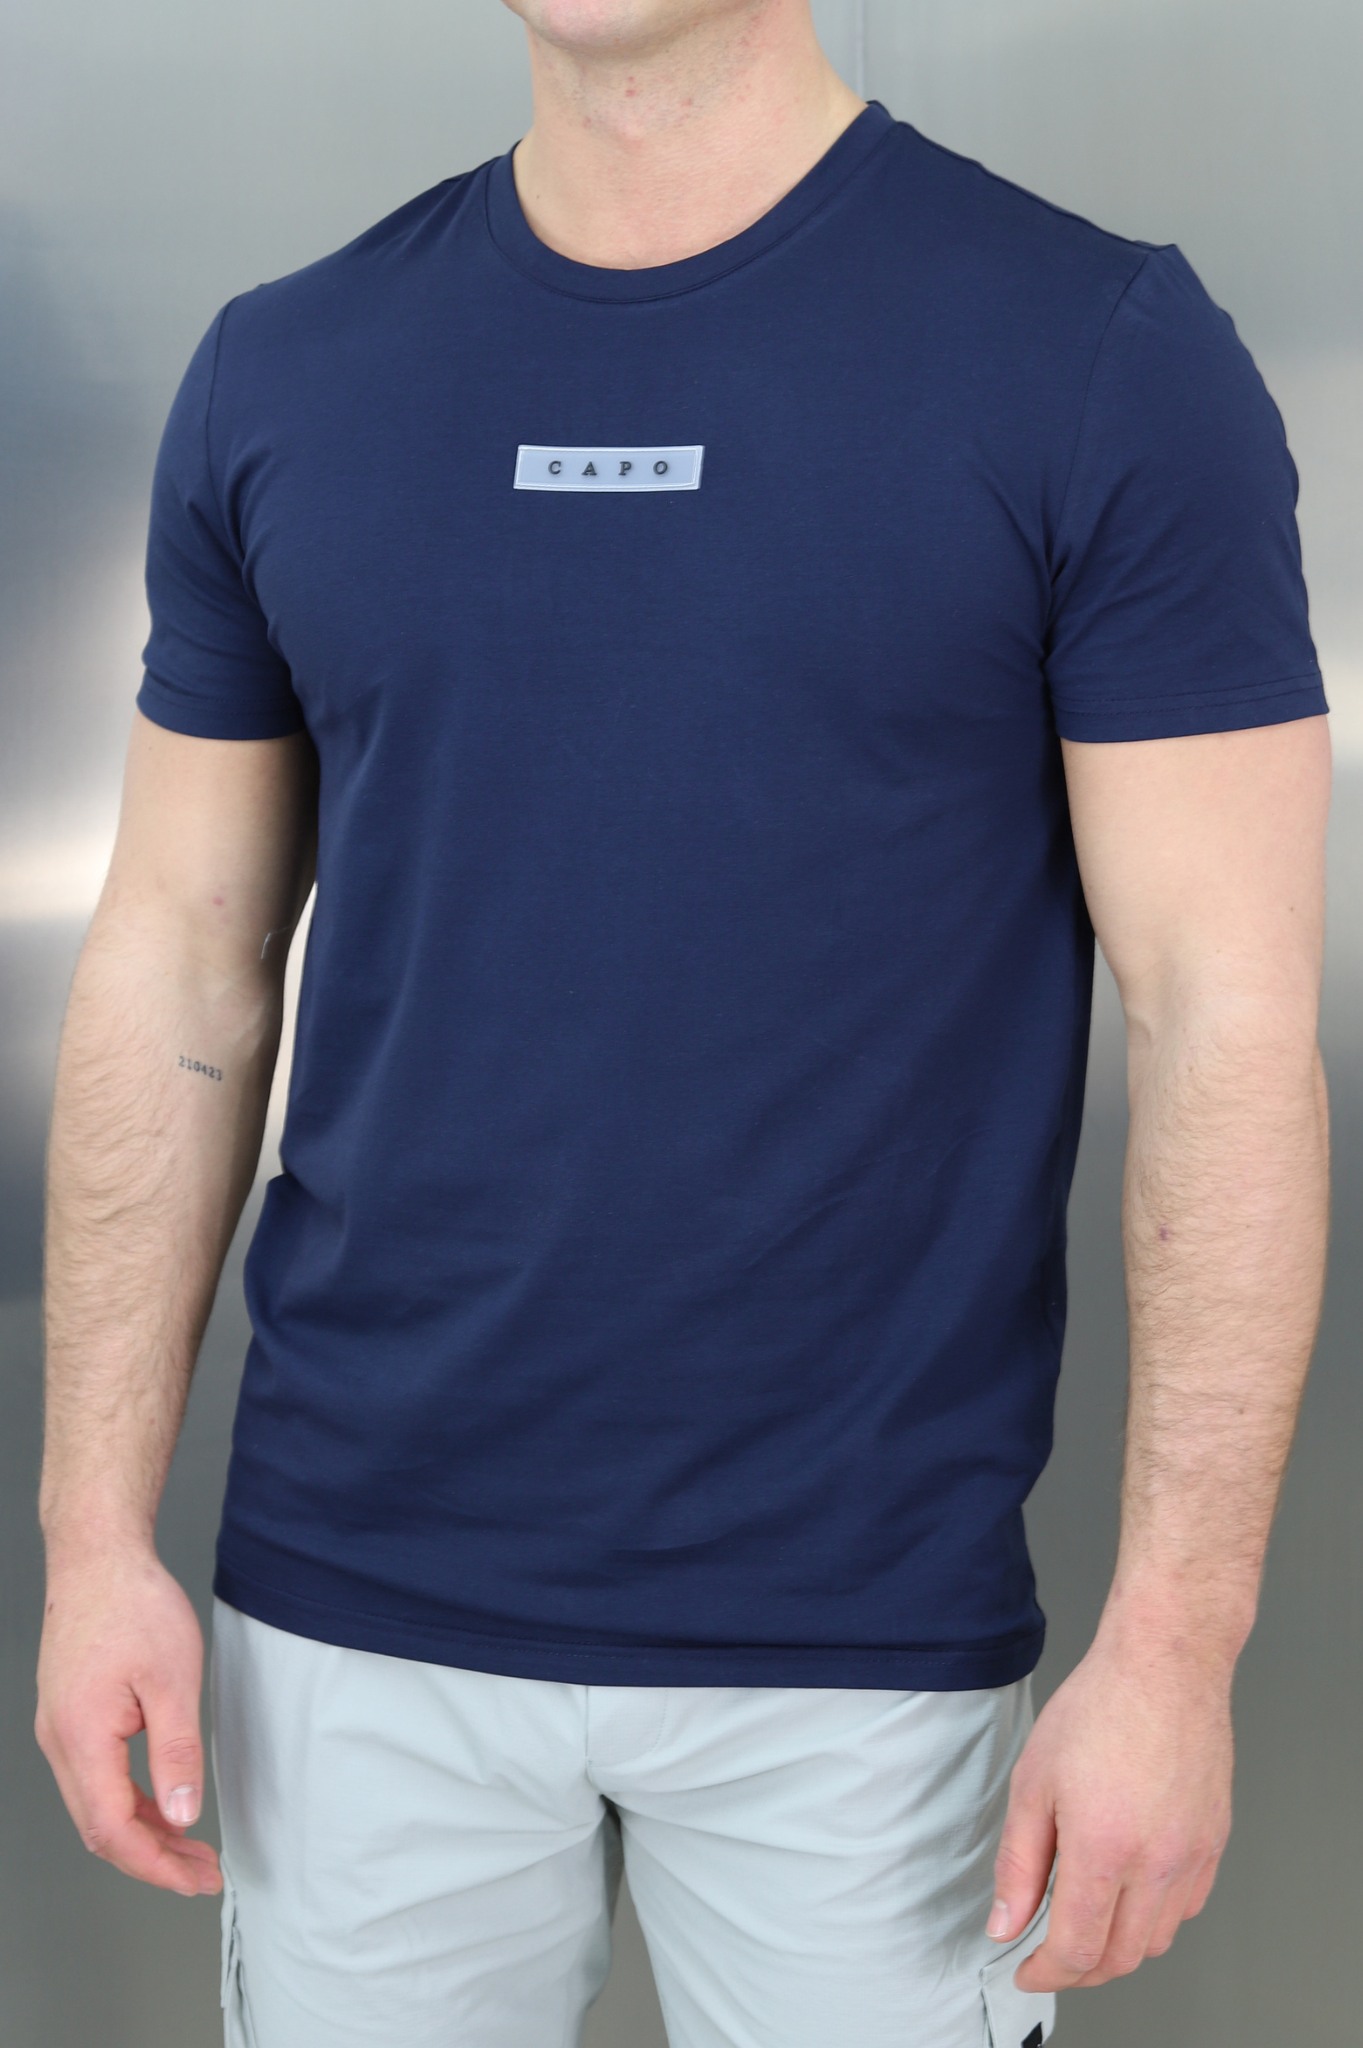 Capo ESSENTIAL T-Shirt - Navy